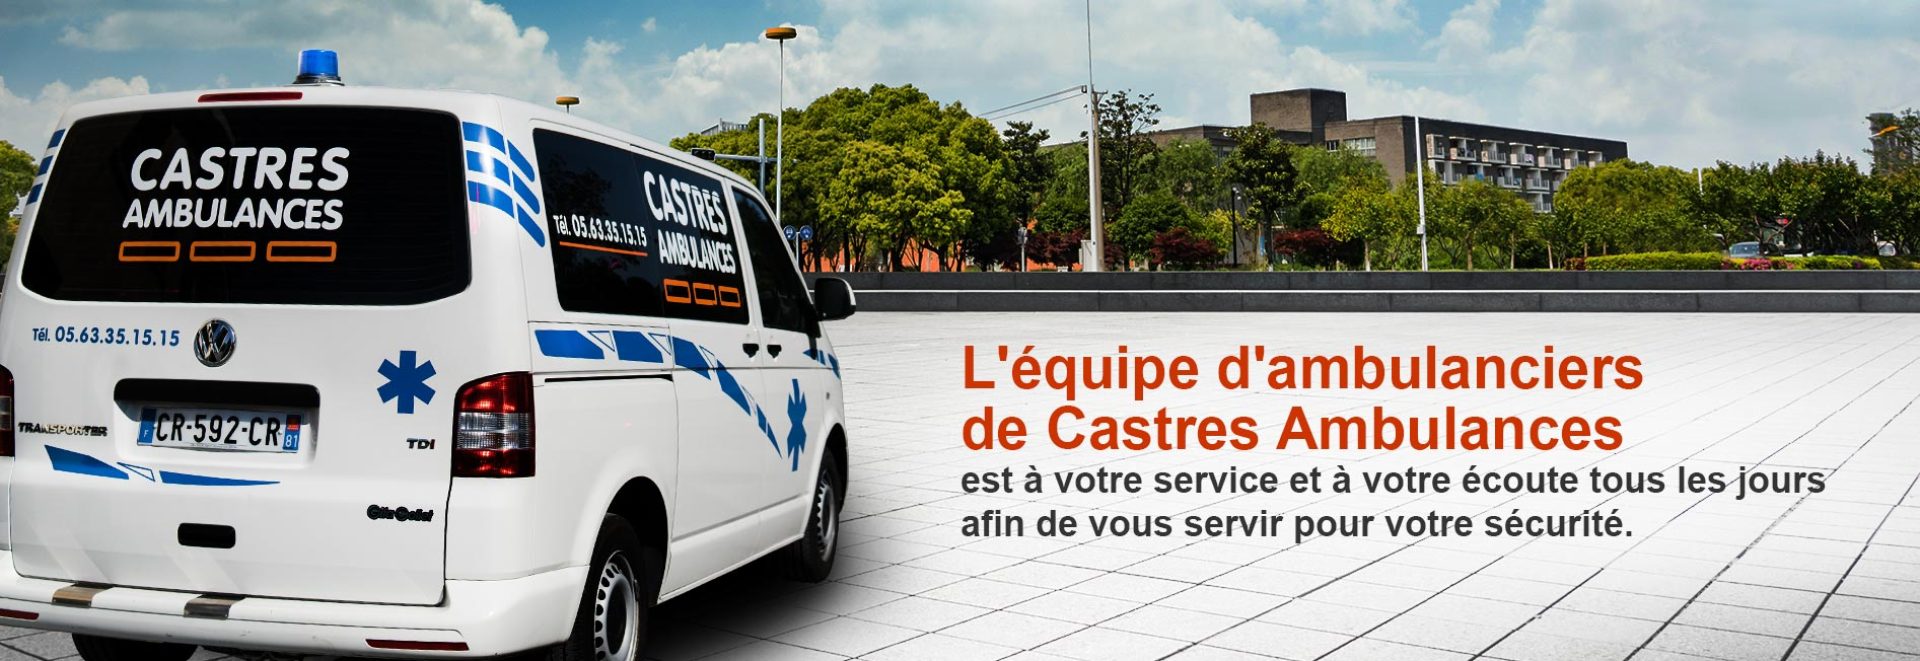 illustration-castres-ambulances-06